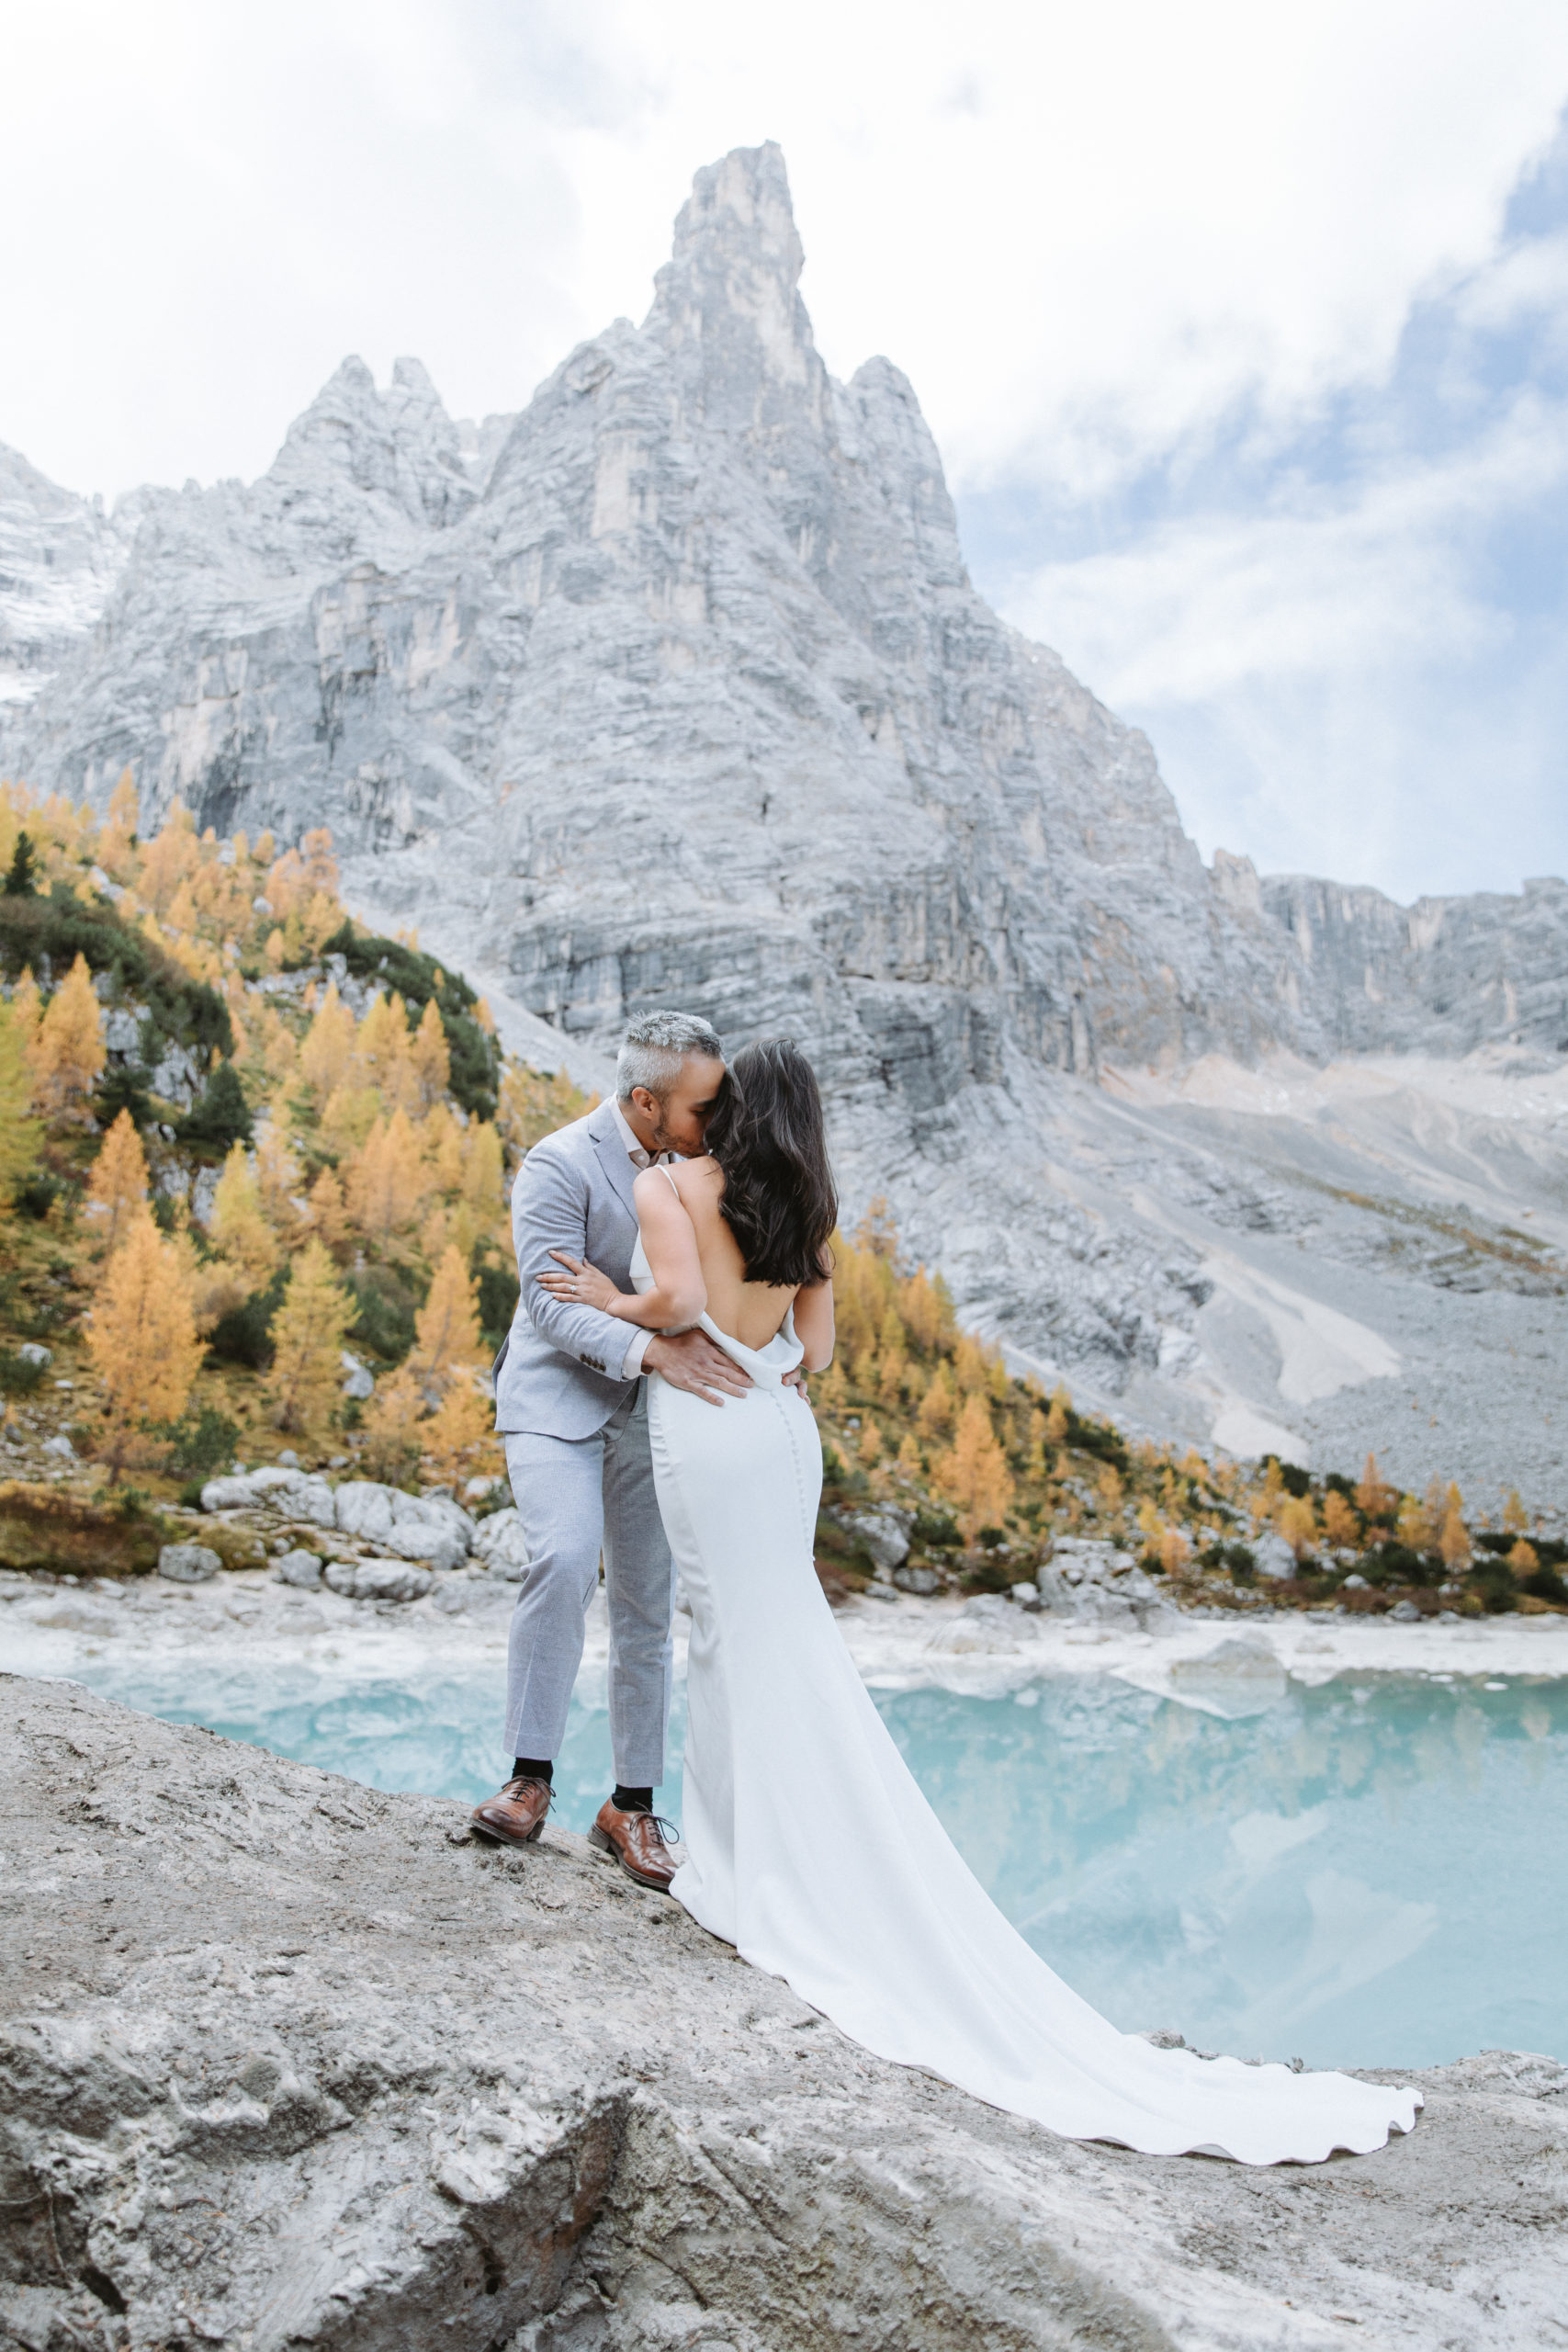 A couple embraces while wearing their wedding attire near the impressive peak over Lago di Sorapis during their Dolomites elopement.